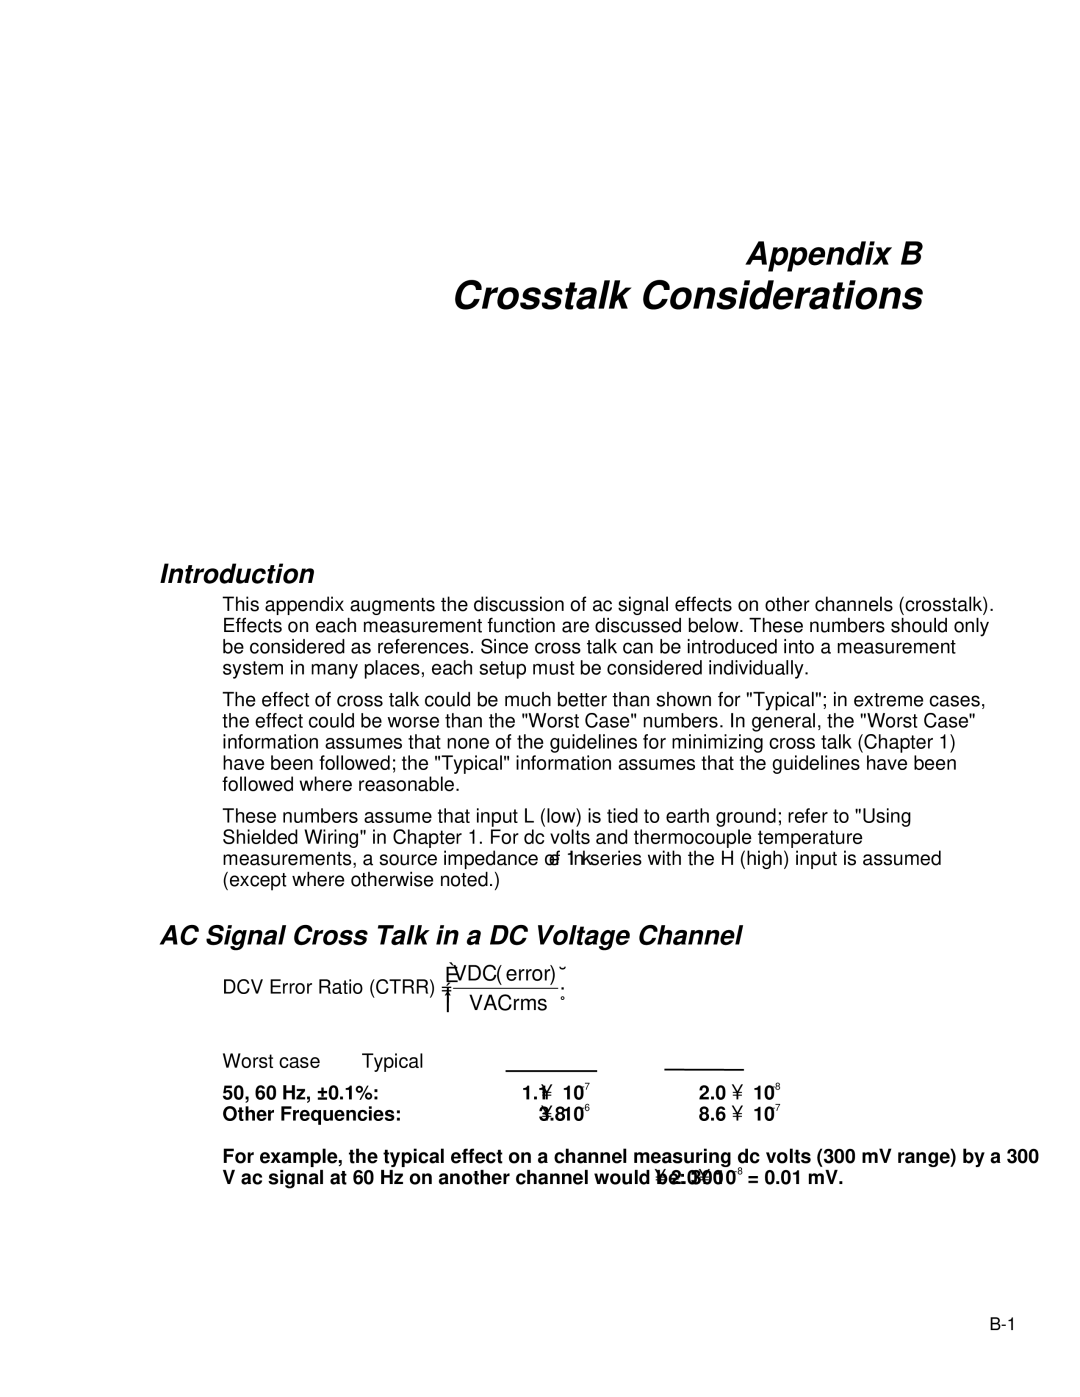 Fluke 2635A user manual Crosstalk Considerations, AC Signal Cross Talk in a DC Voltage Channel 